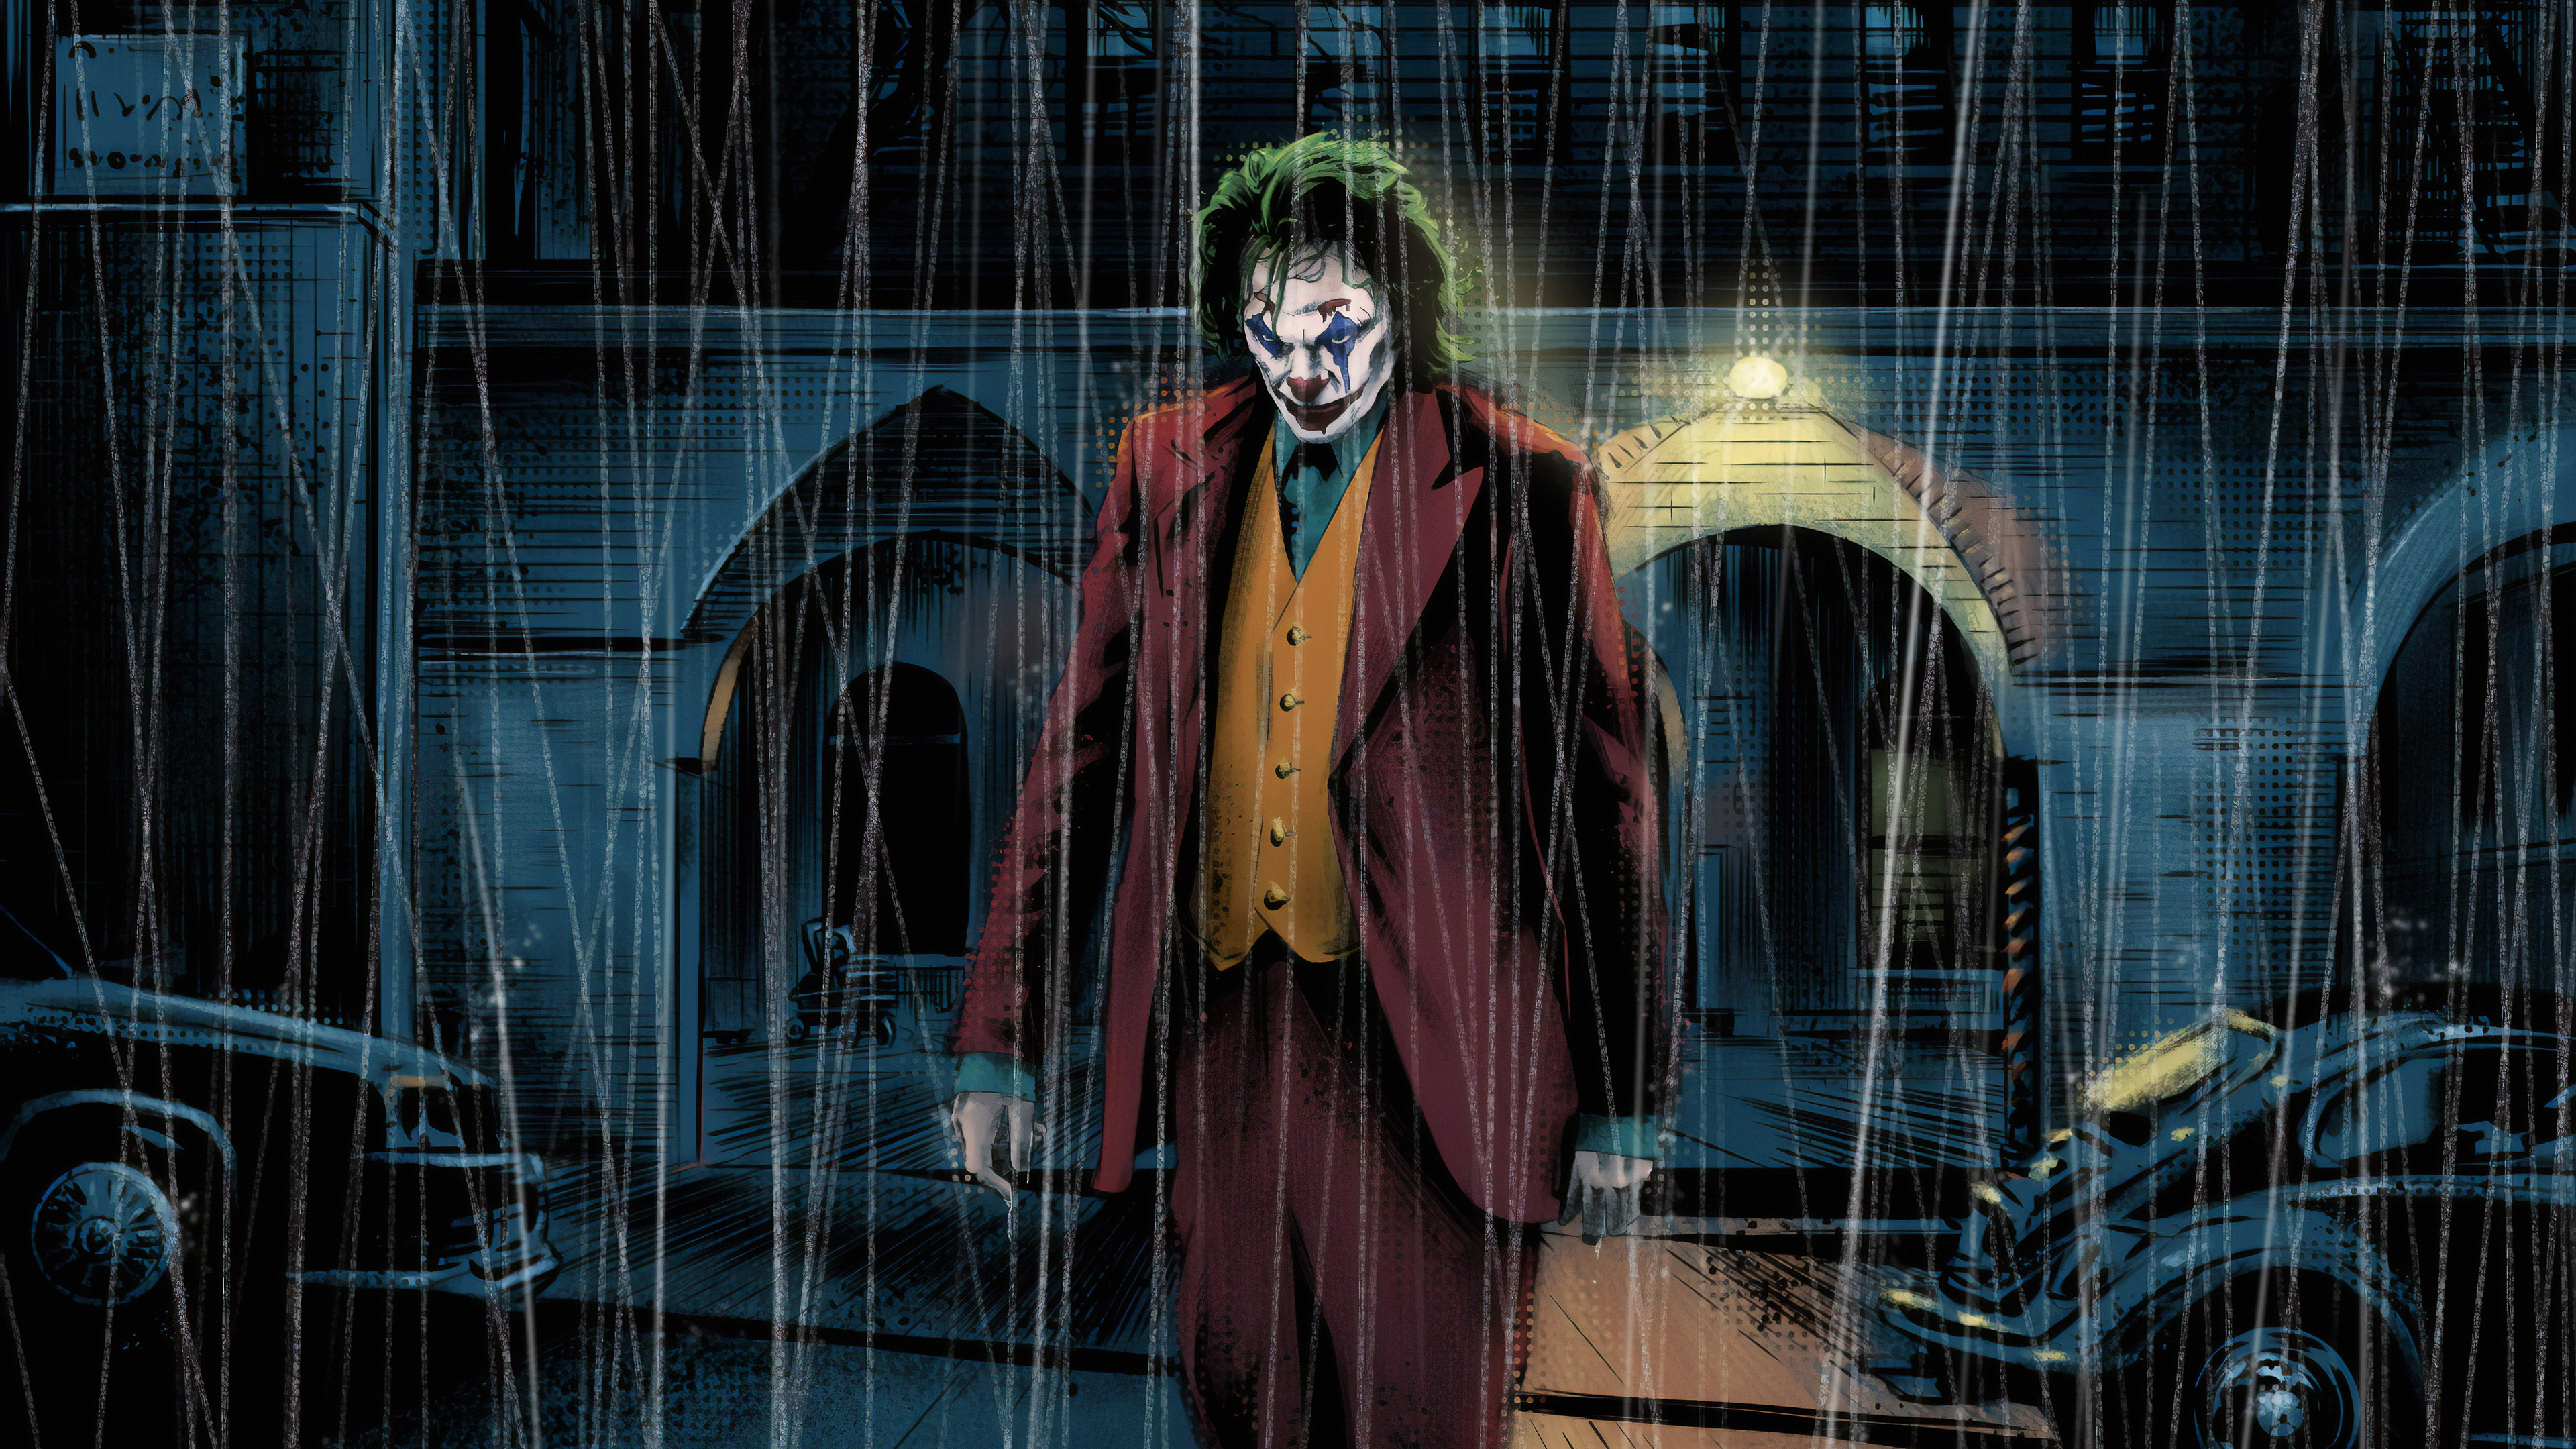 Joker 4k Newart Hd Superheroes 4k Wallpapers Images Backgrounds